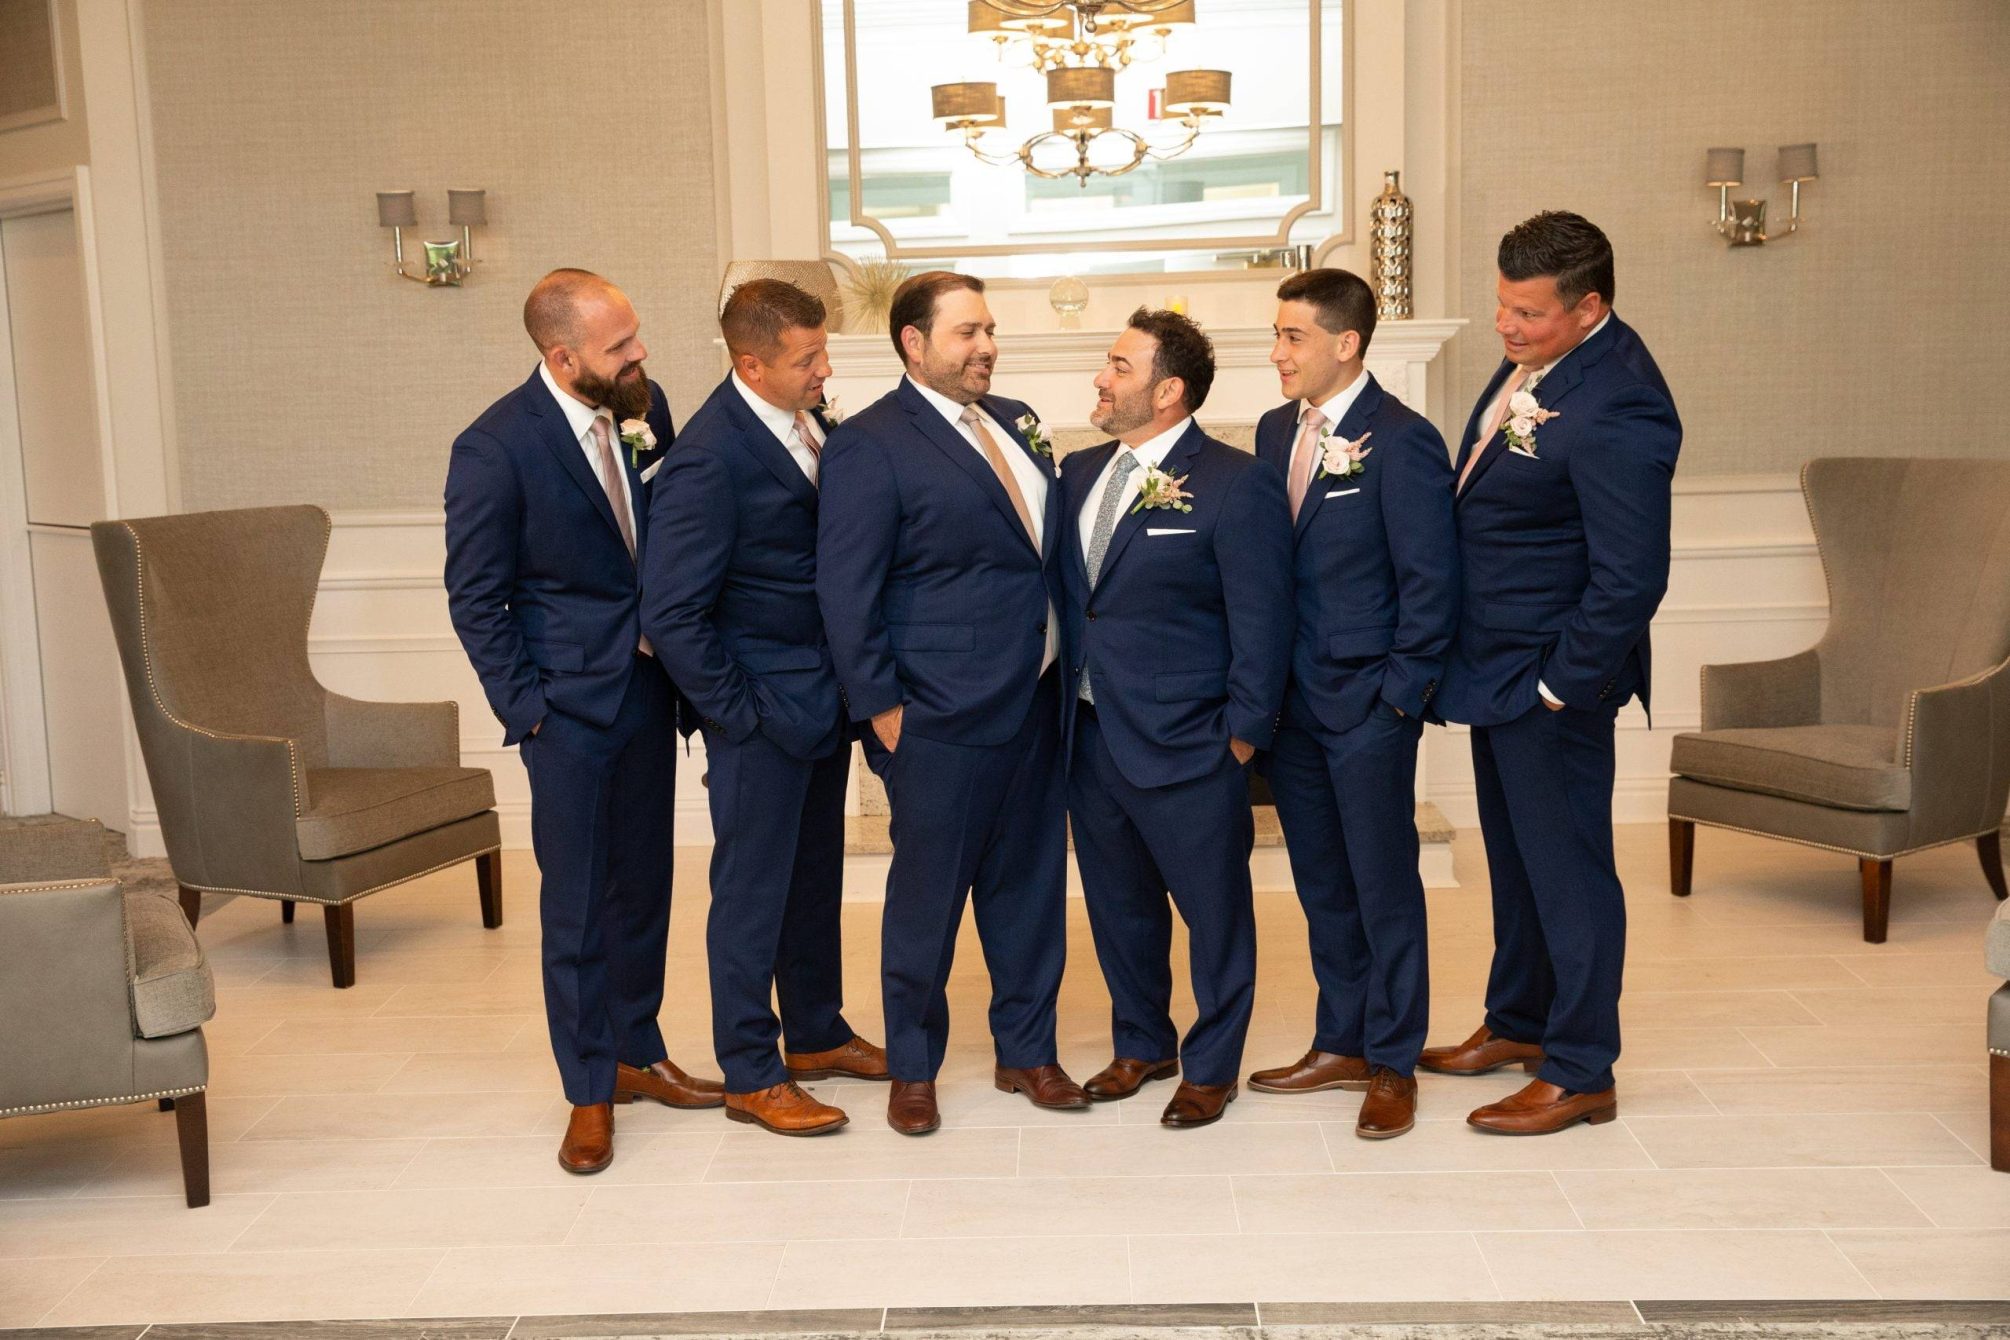 Brooklake groom and groomsmen are ready